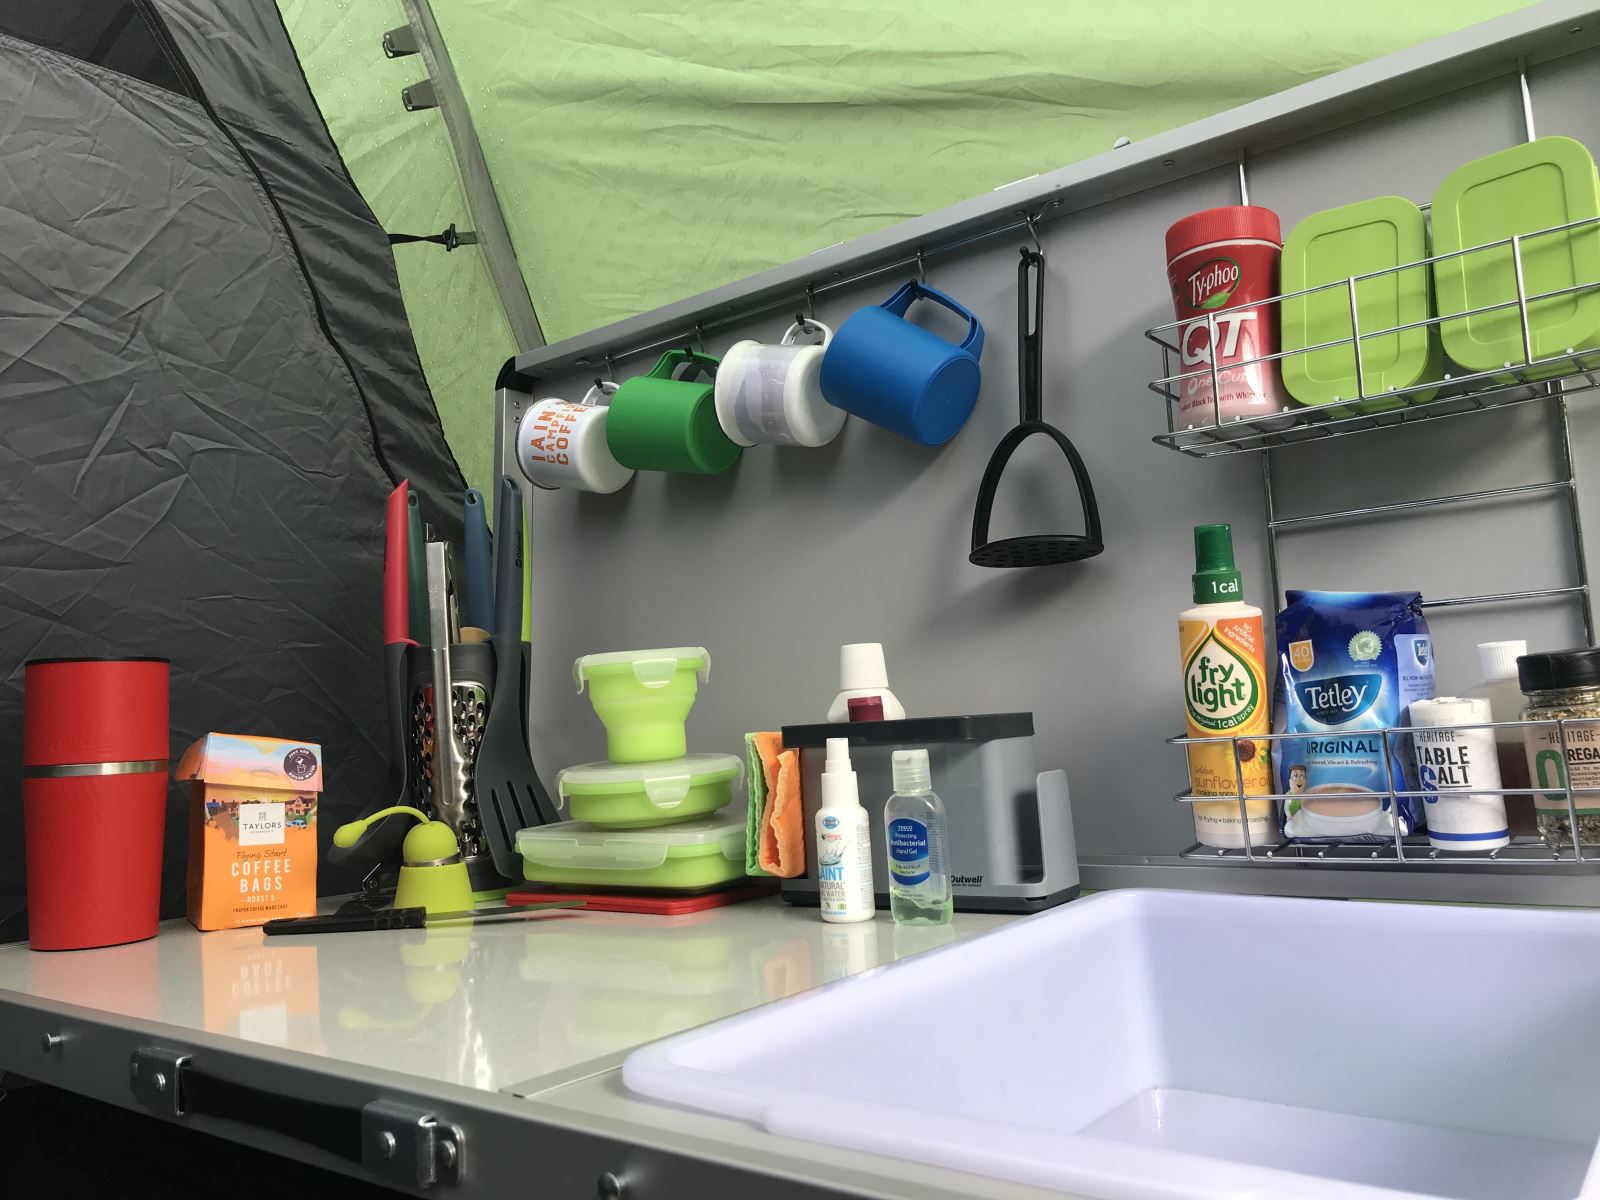 A camping kitchen worktop